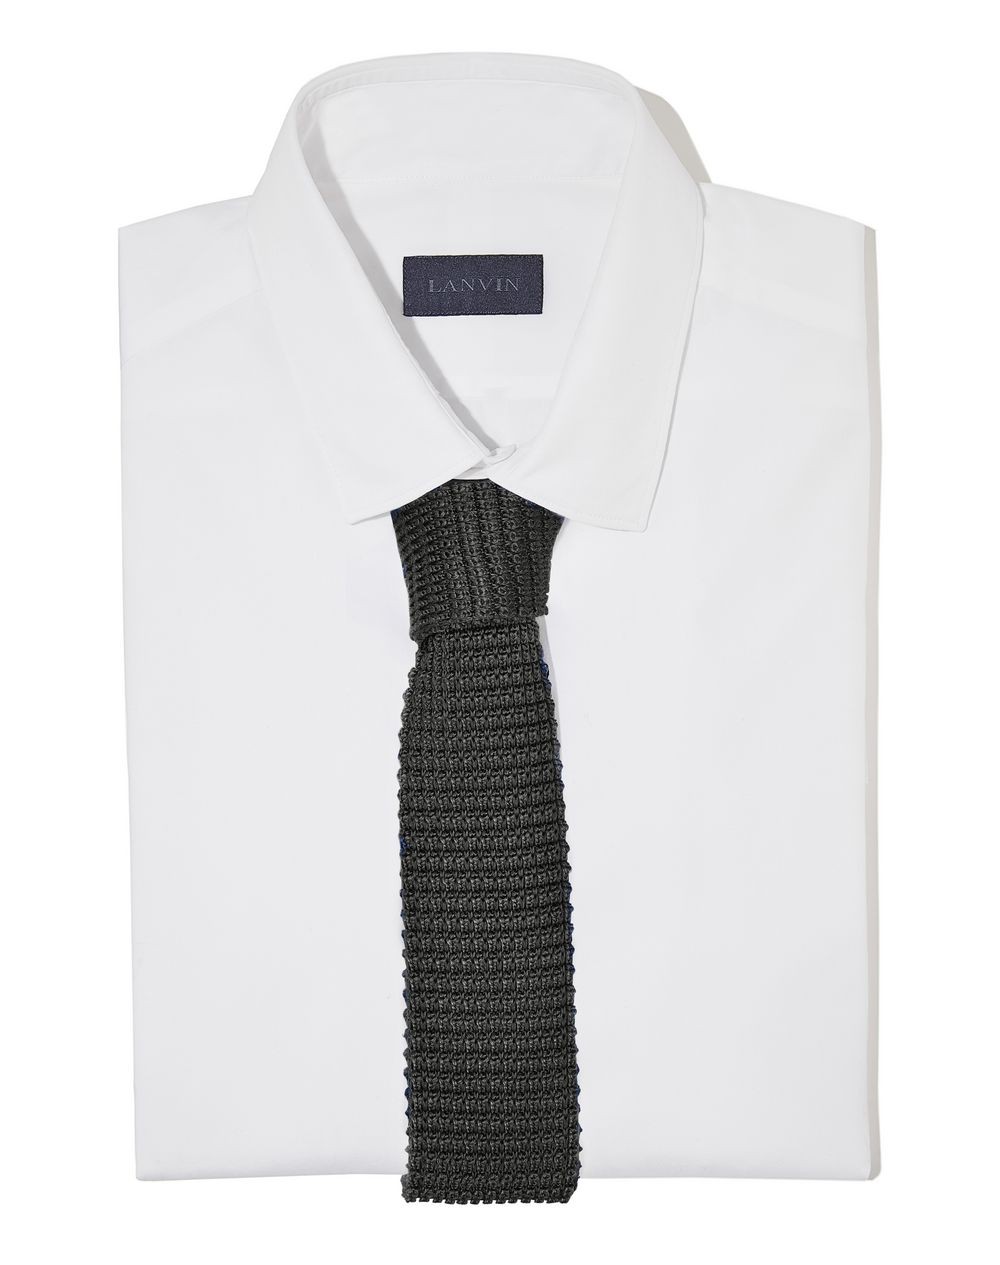 Lanvin Paris Tie Black In Seta Tricot RMAC 1990T7 A1710  - New Collection Spring Summer 2018